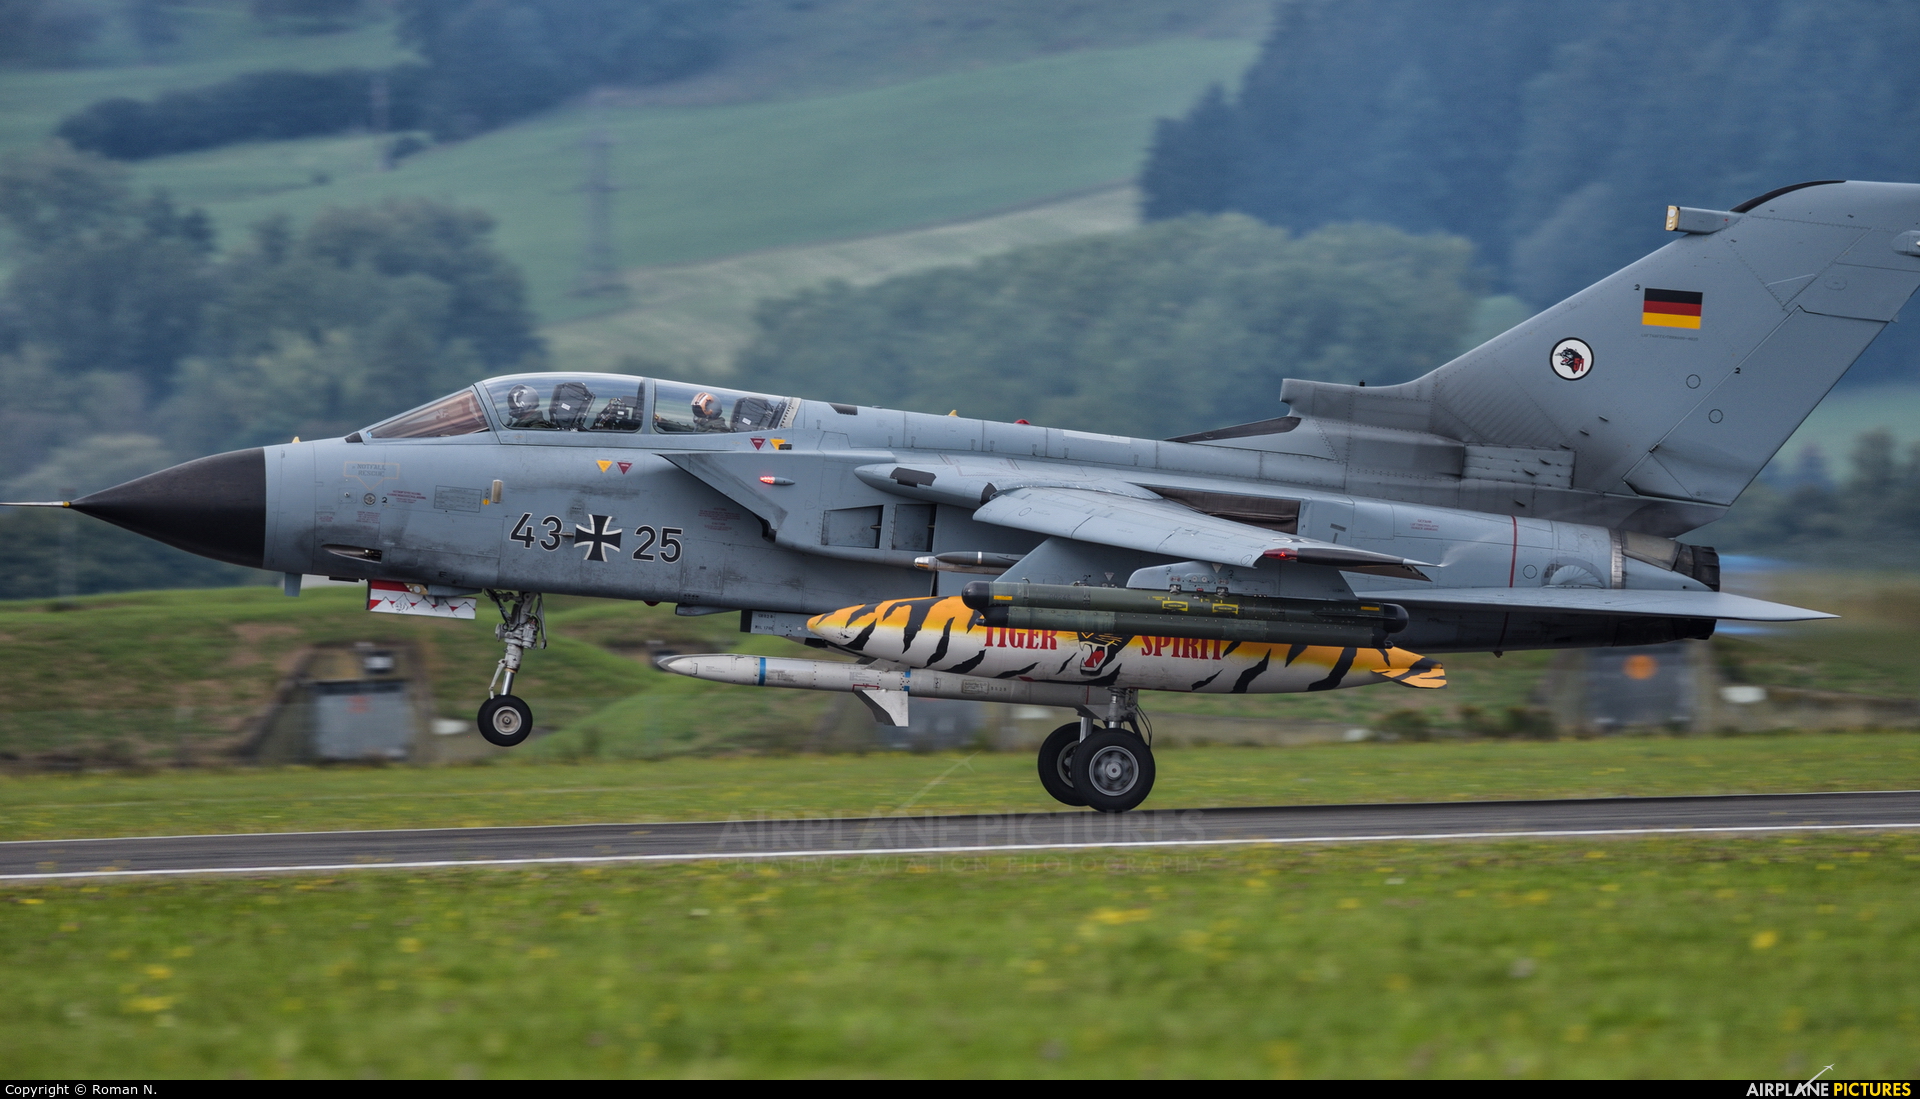 Germany - Air Force 43+25 aircraft at Zeltweg